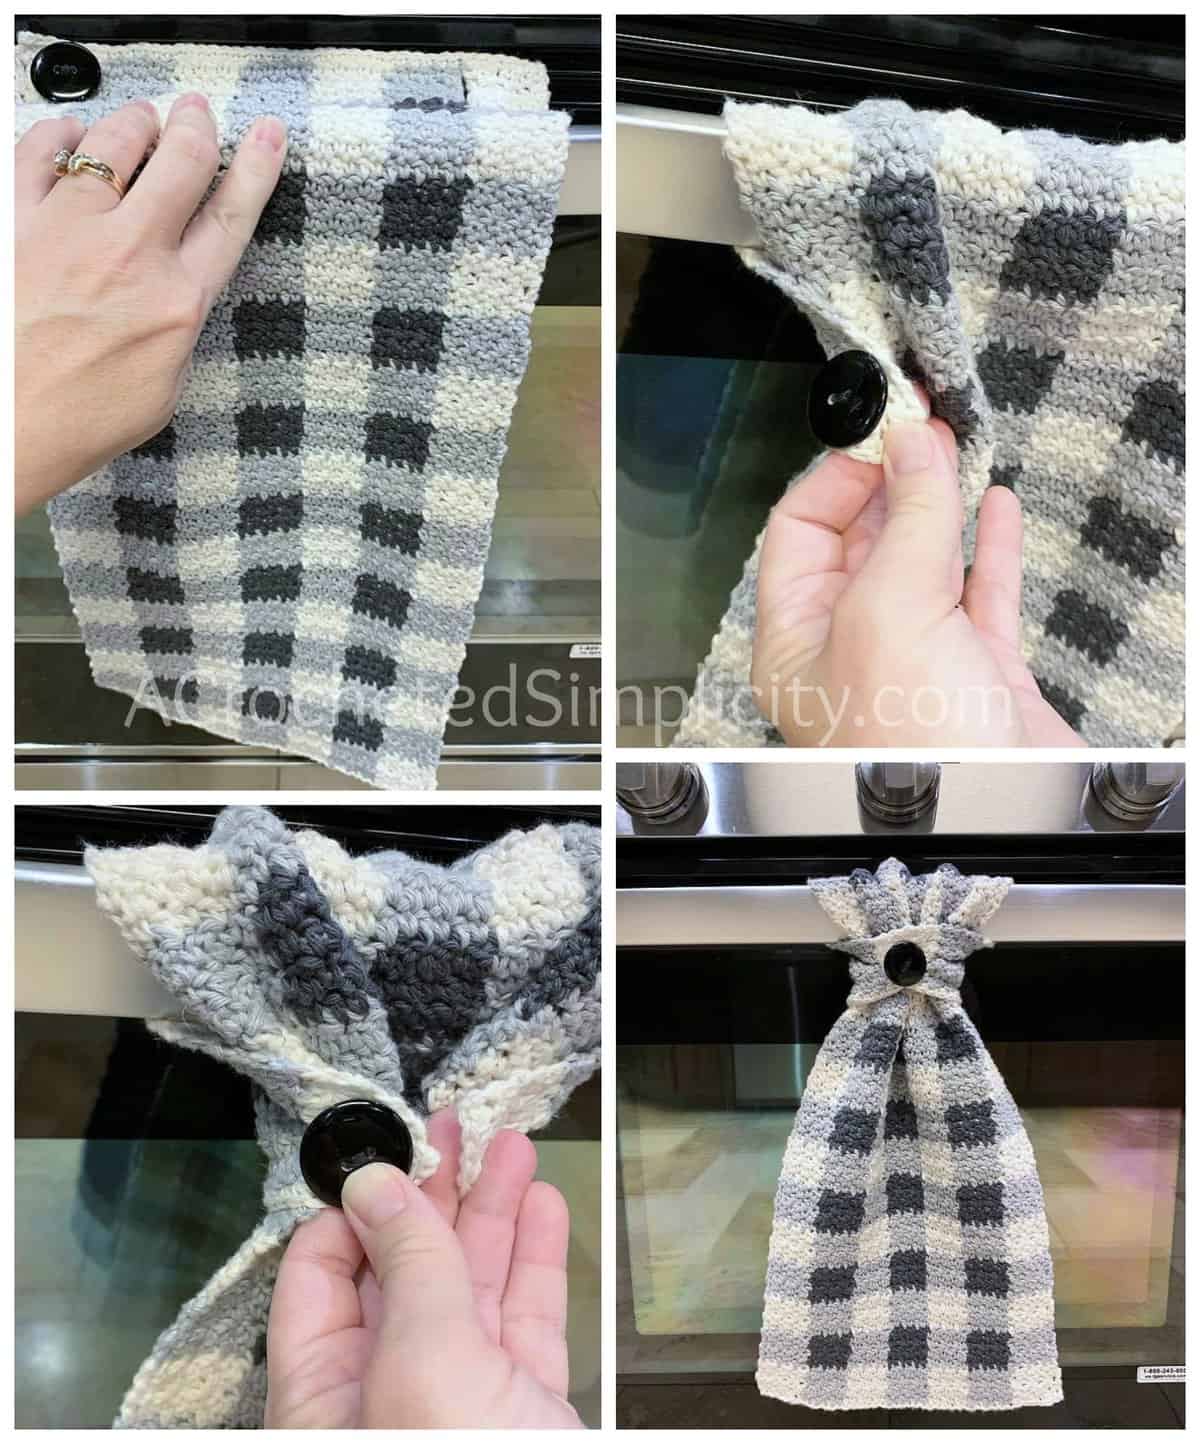 Farmhouse Heart Outlines Crochet Kitchen Towel